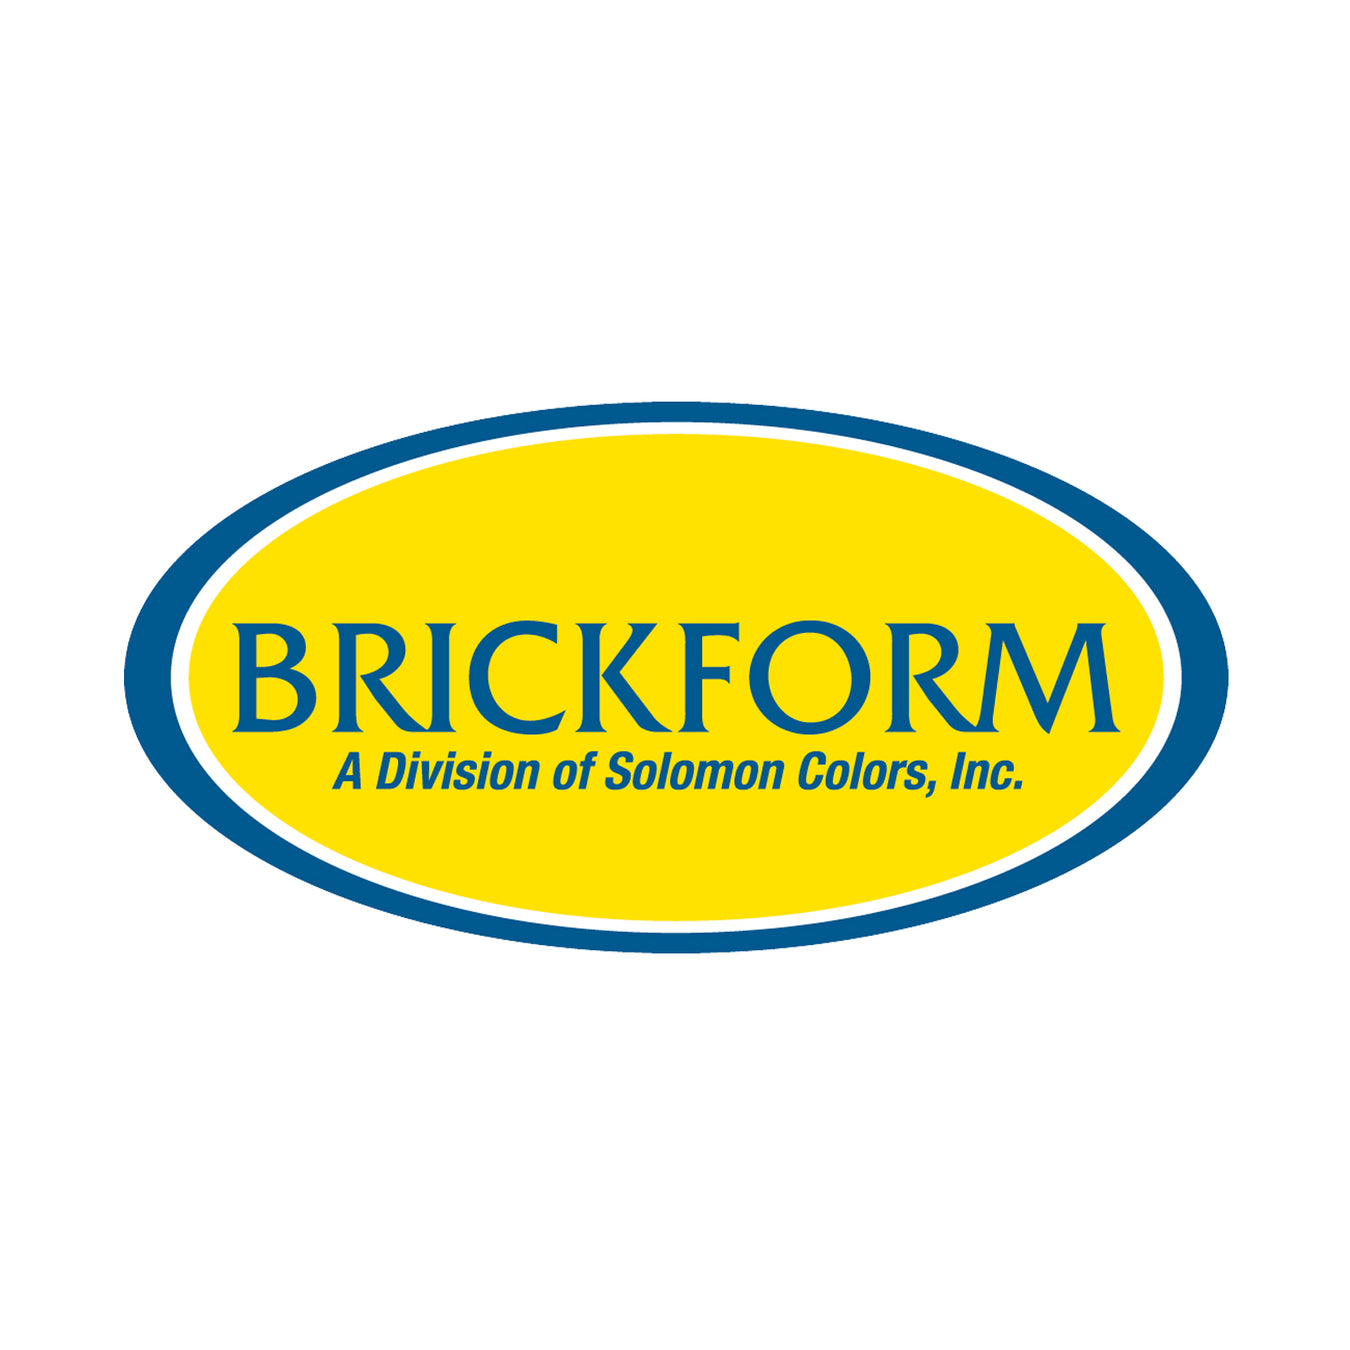 Brickform